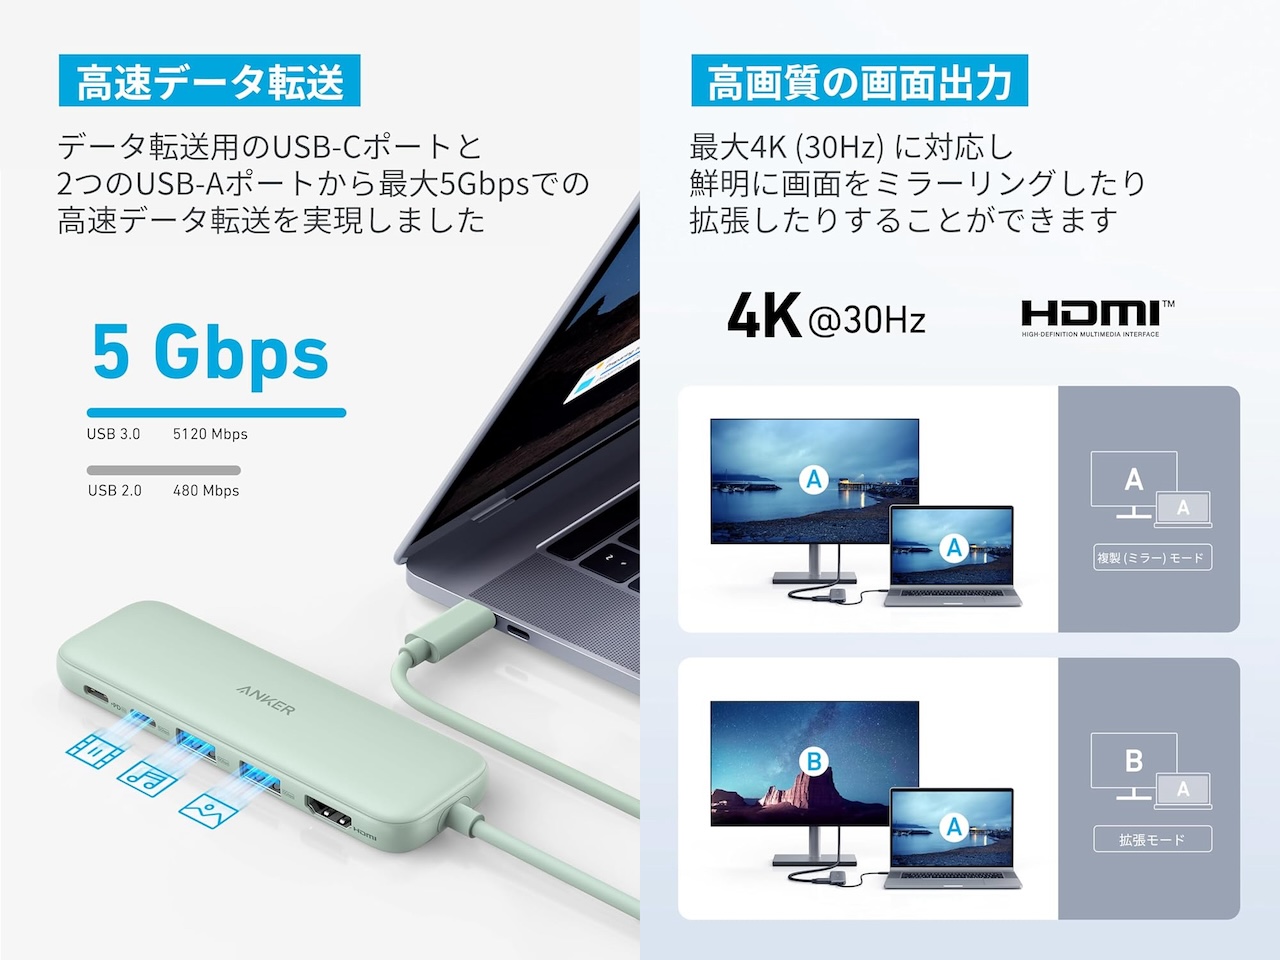 Anker 332 USB-C ハブ (5-in-1)